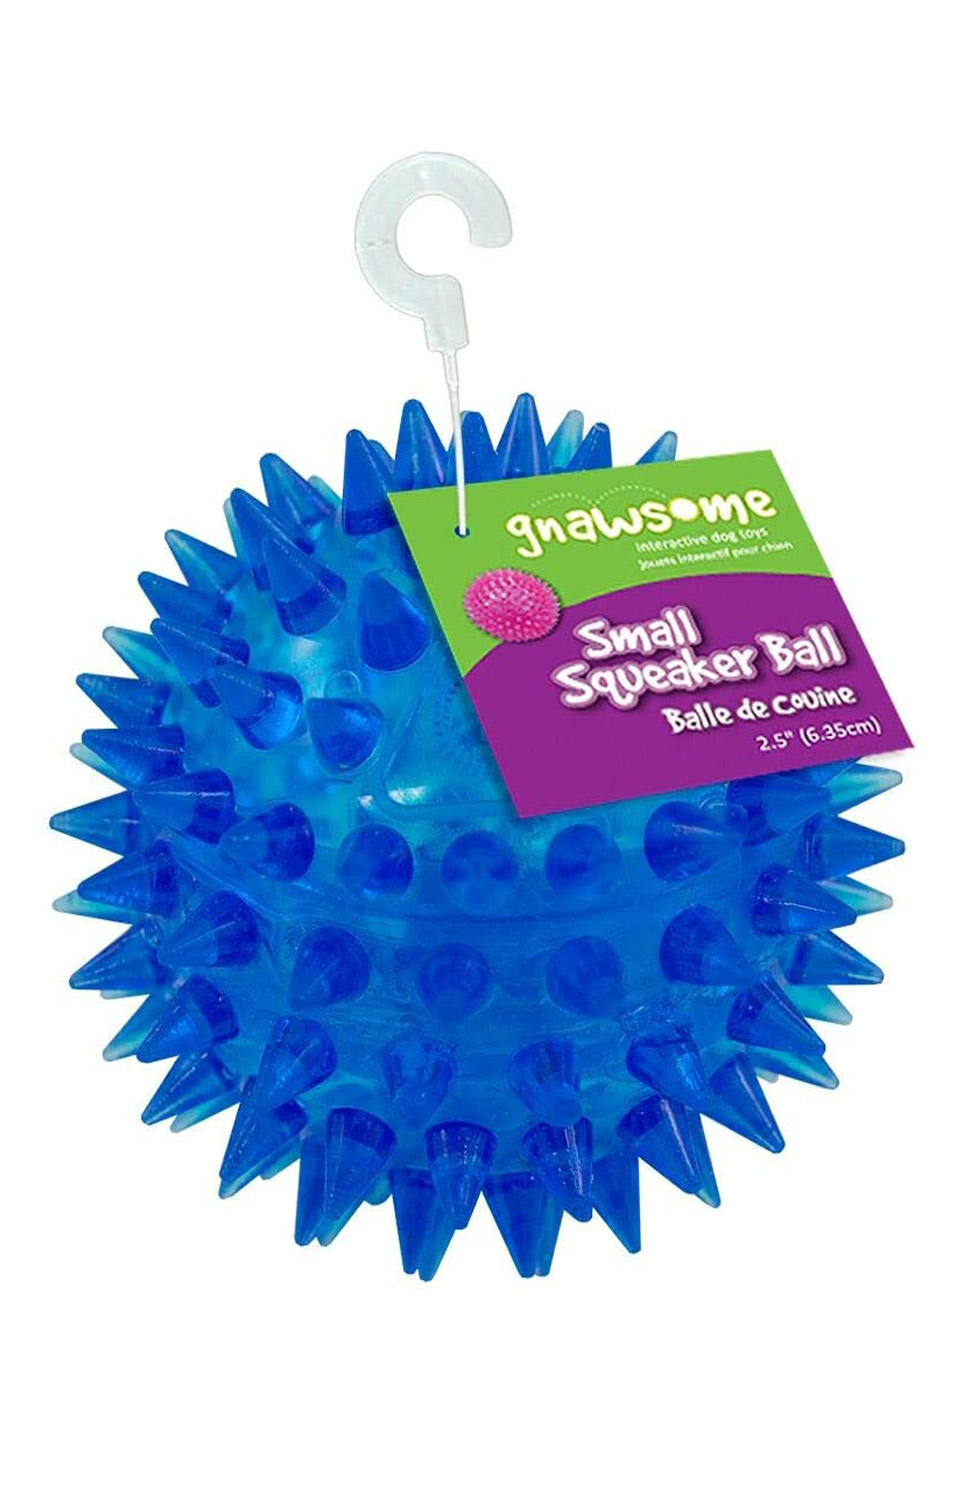 Gnawsome 2.5” Spiky Squeaker Ball 